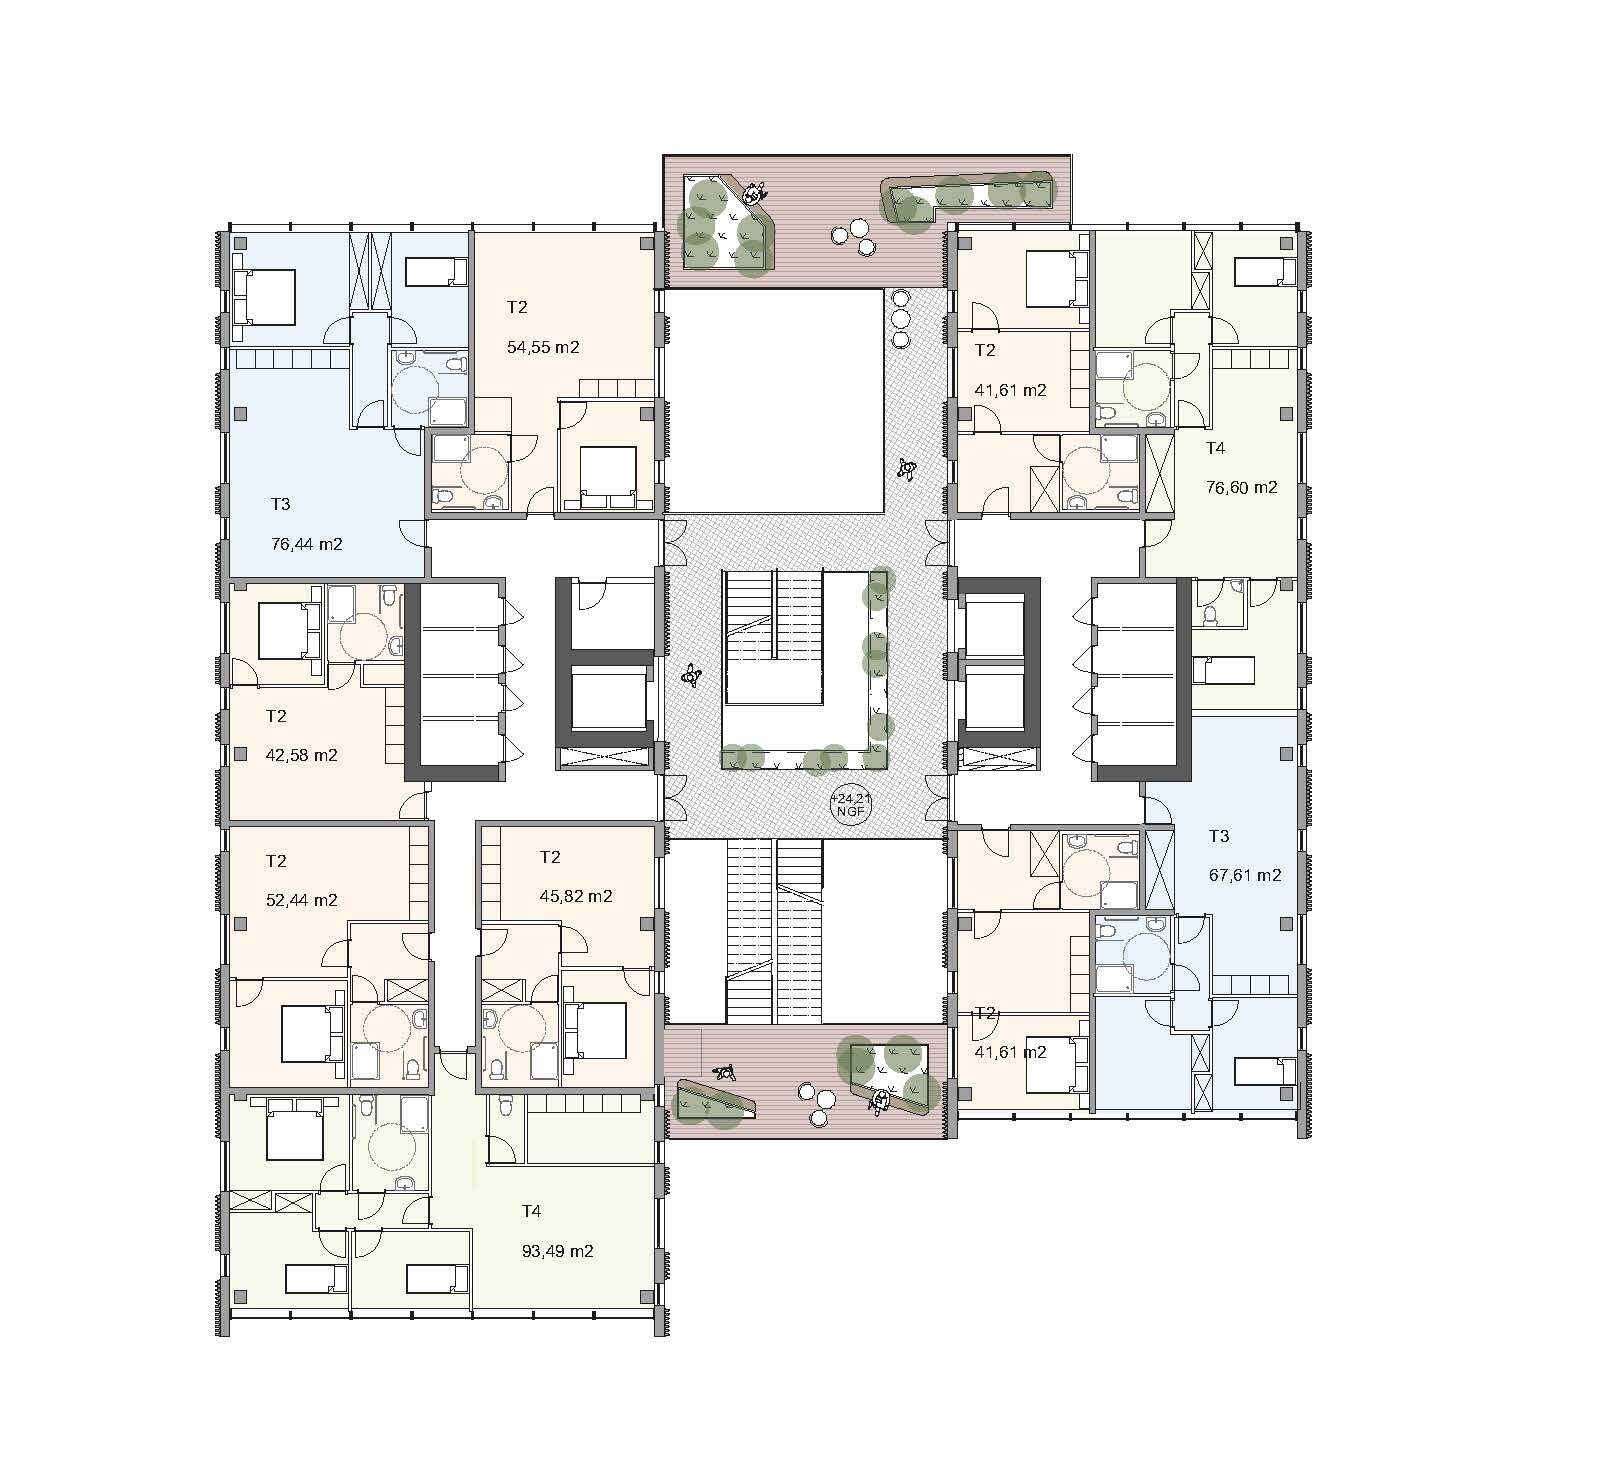 2109-nice-rev-logements-scaled-aspect-ratio-1559-1426